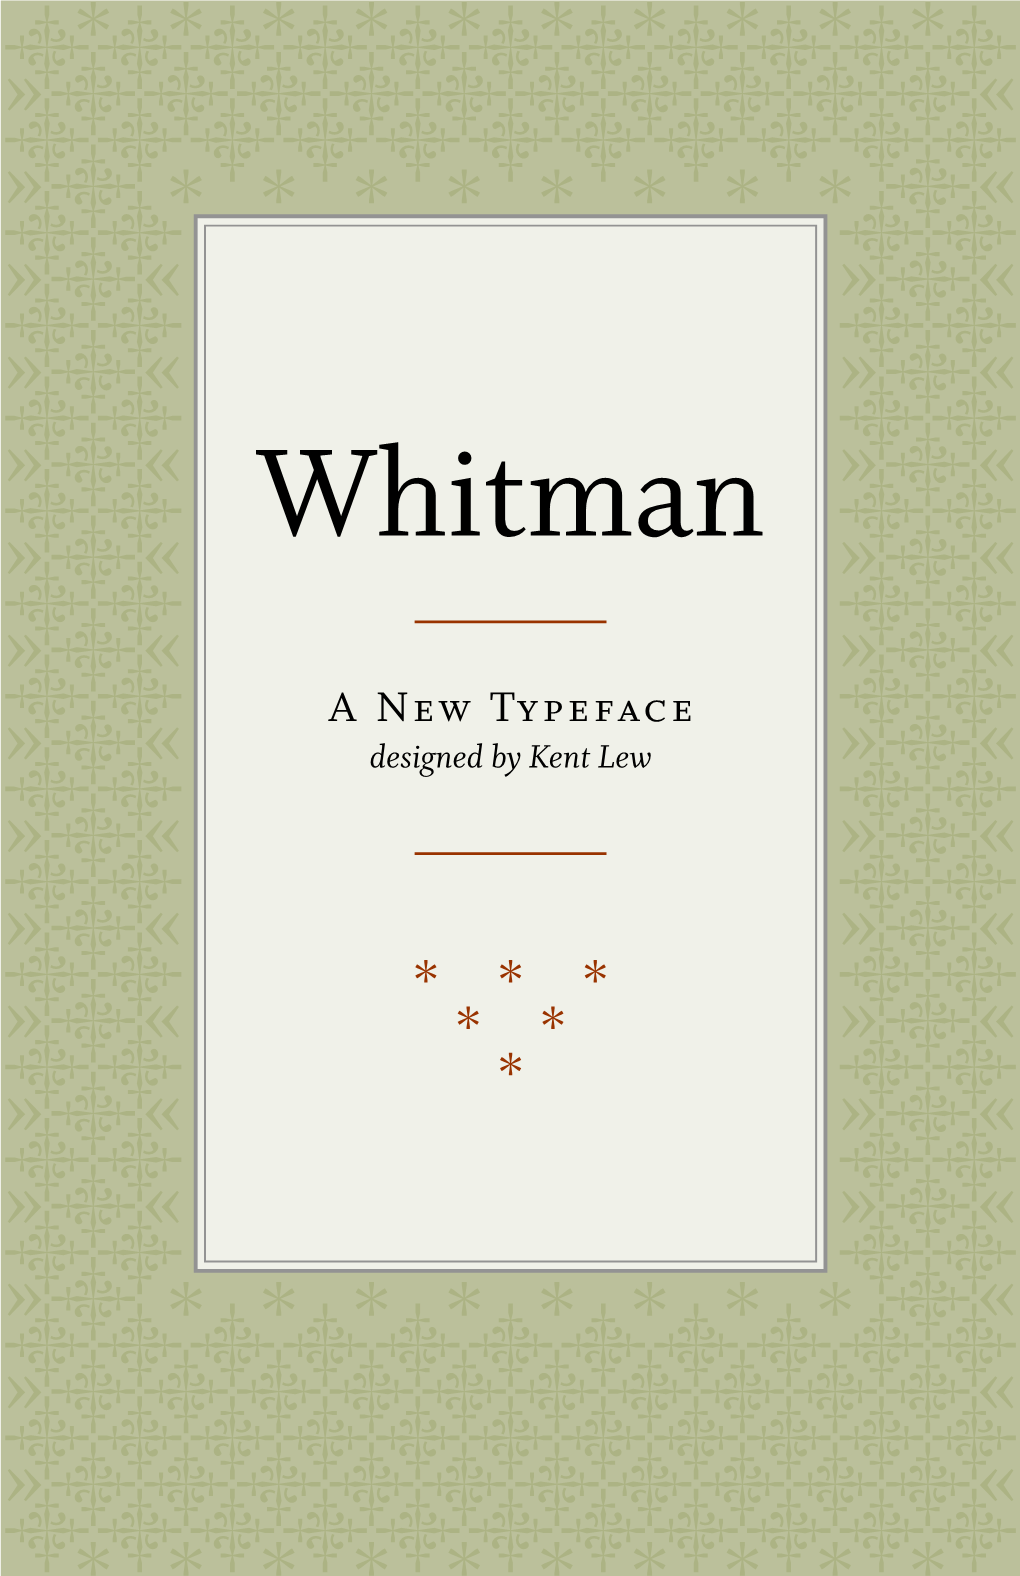 Whitman PDF Specimen